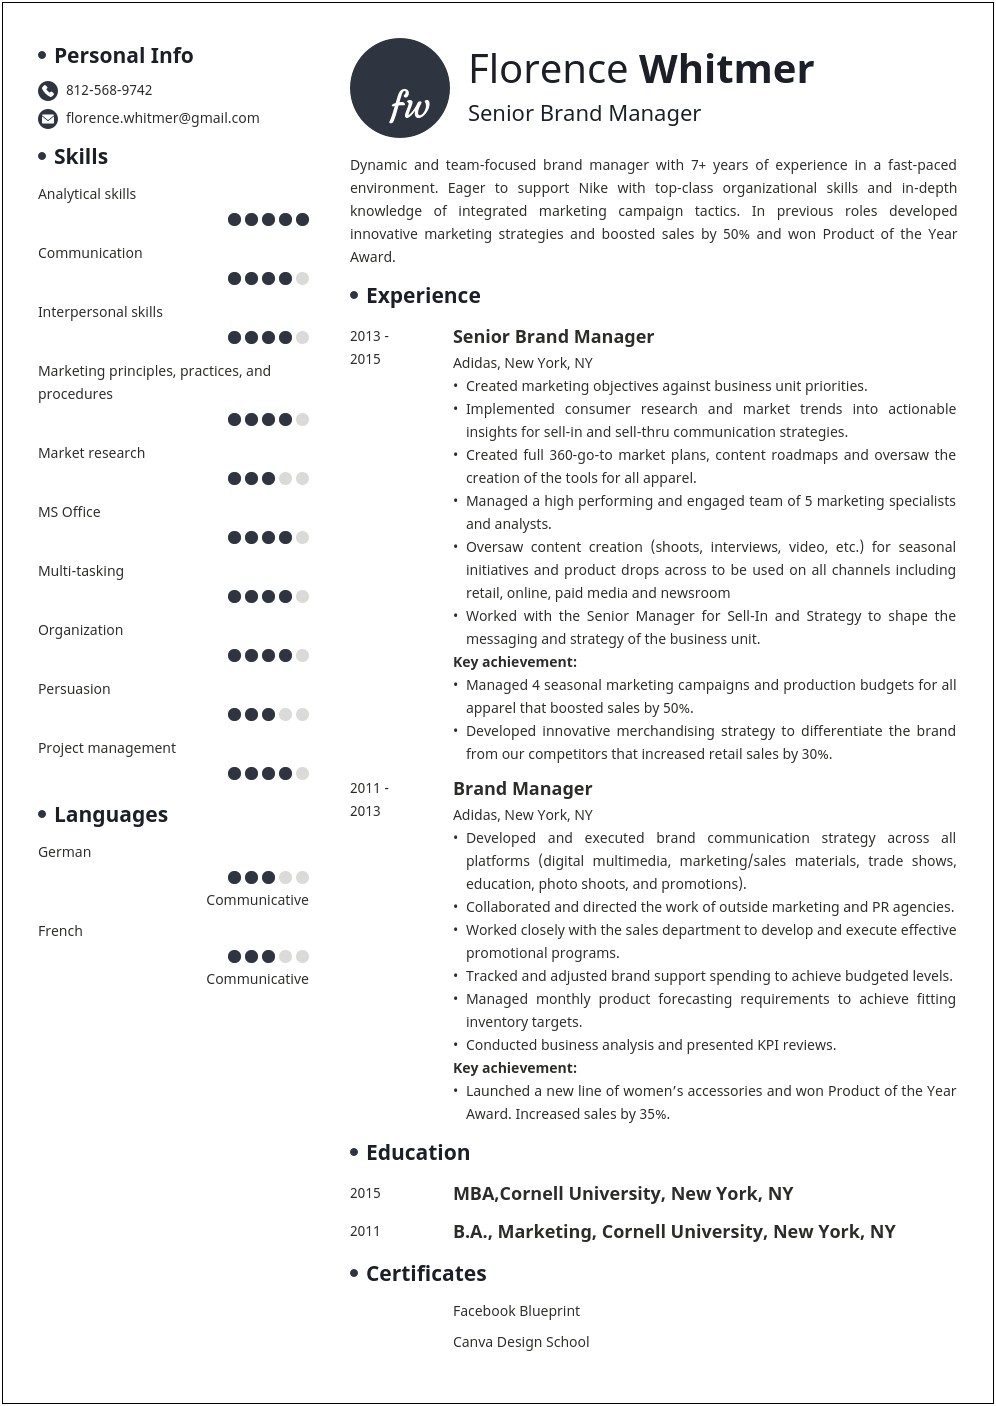 Brand Manager Job Description For Resume